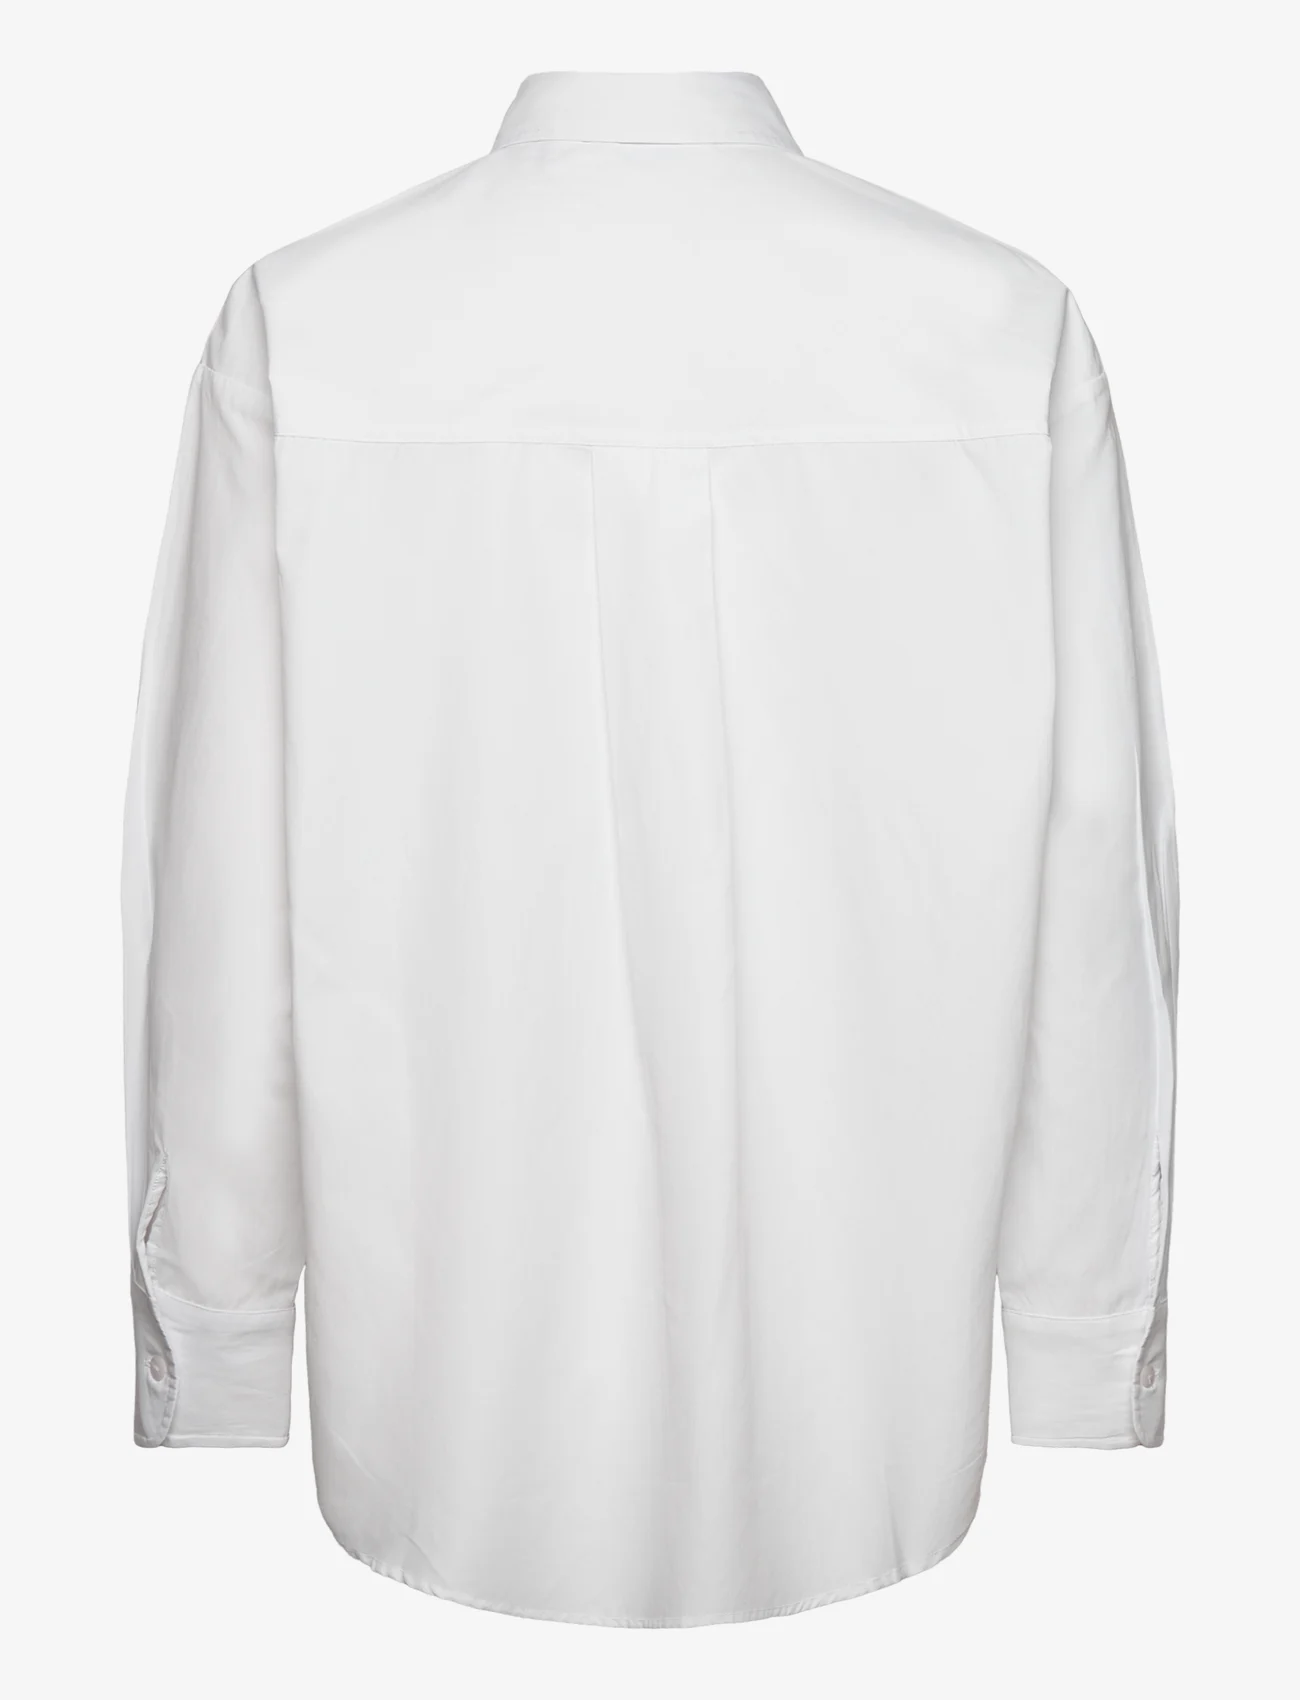 b.young - BYFENTO SHIRT 2 - - langærmede skjorter - optical white - 1